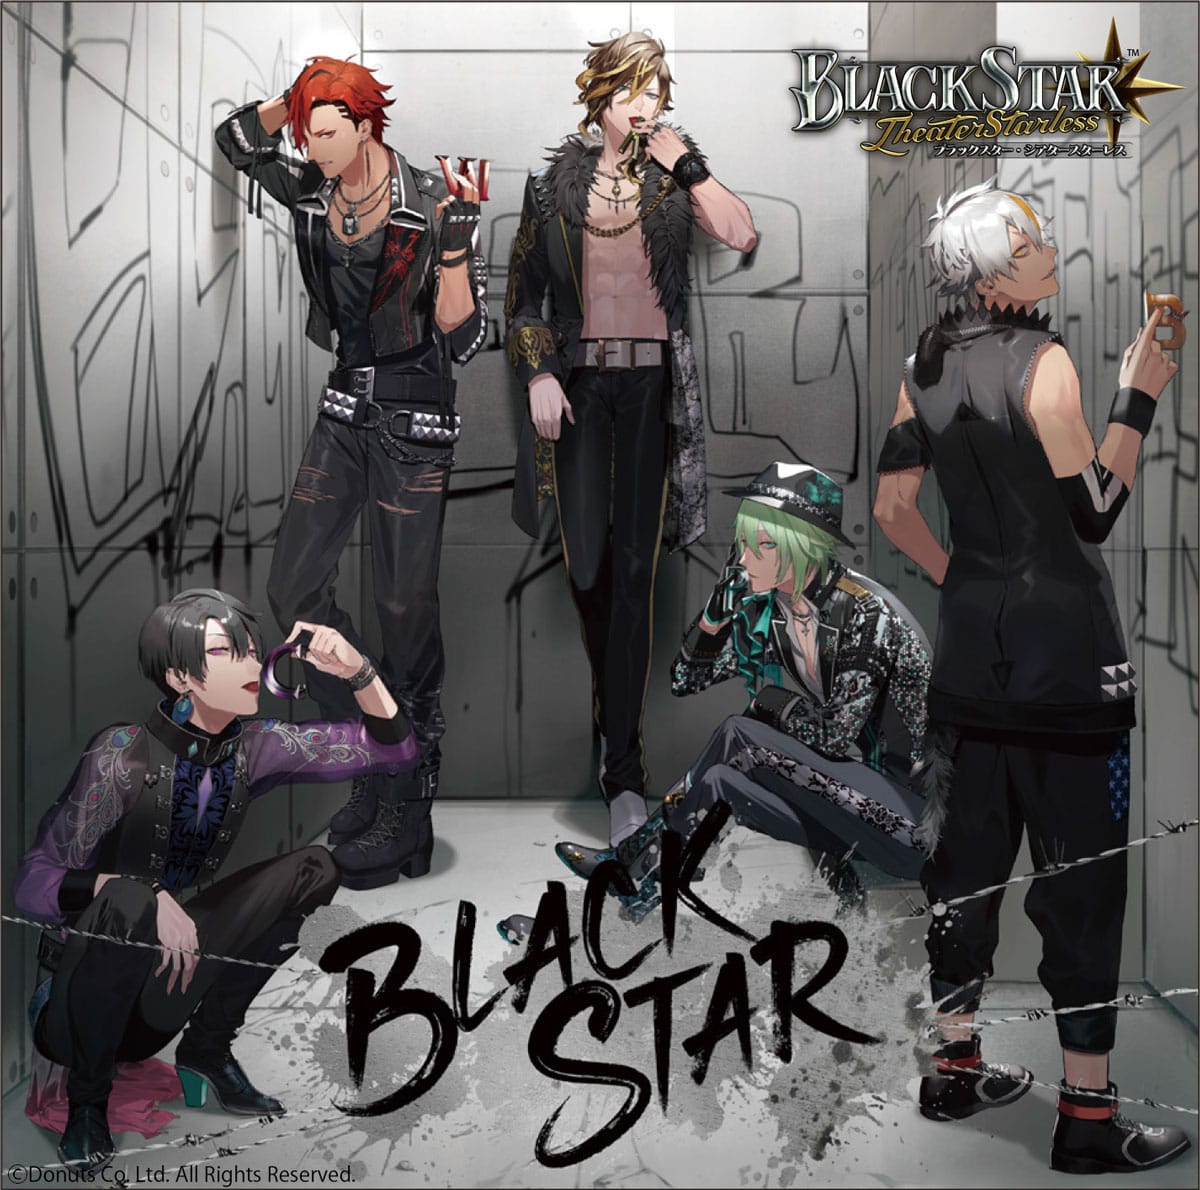 BLACKSTAR 1stアルバム 初回限定盤 team B C K W P | skisharp.com